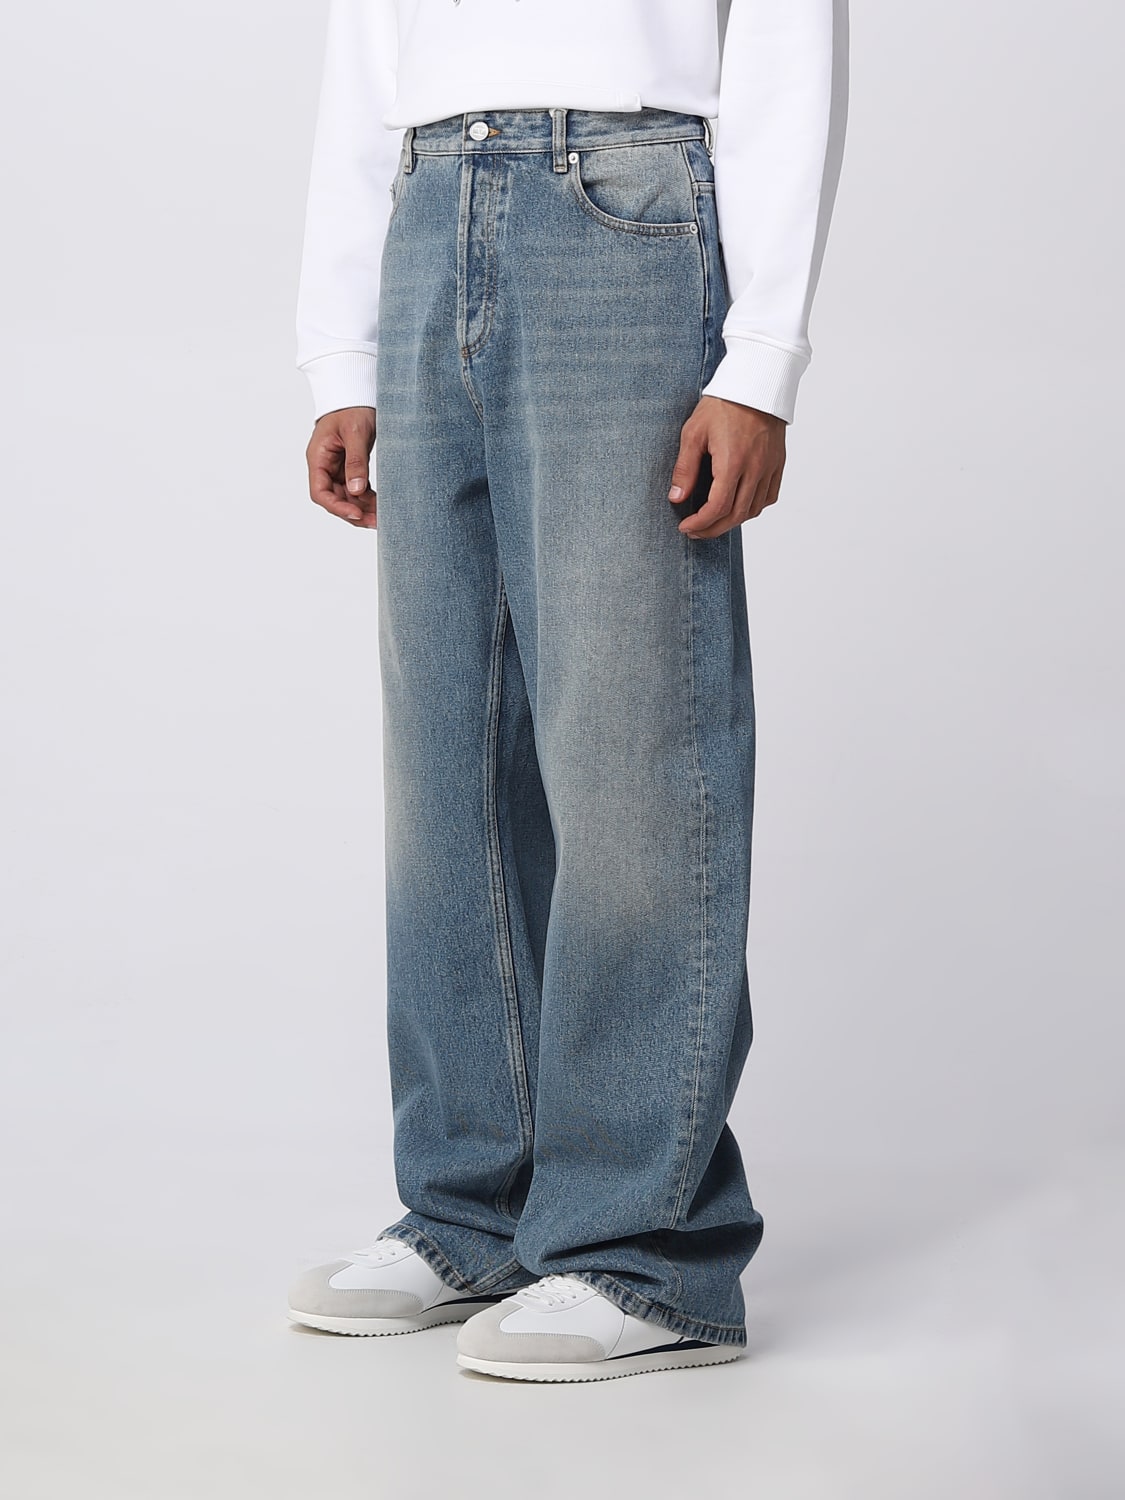 jeans for man - Denim | Valentino jeans online on